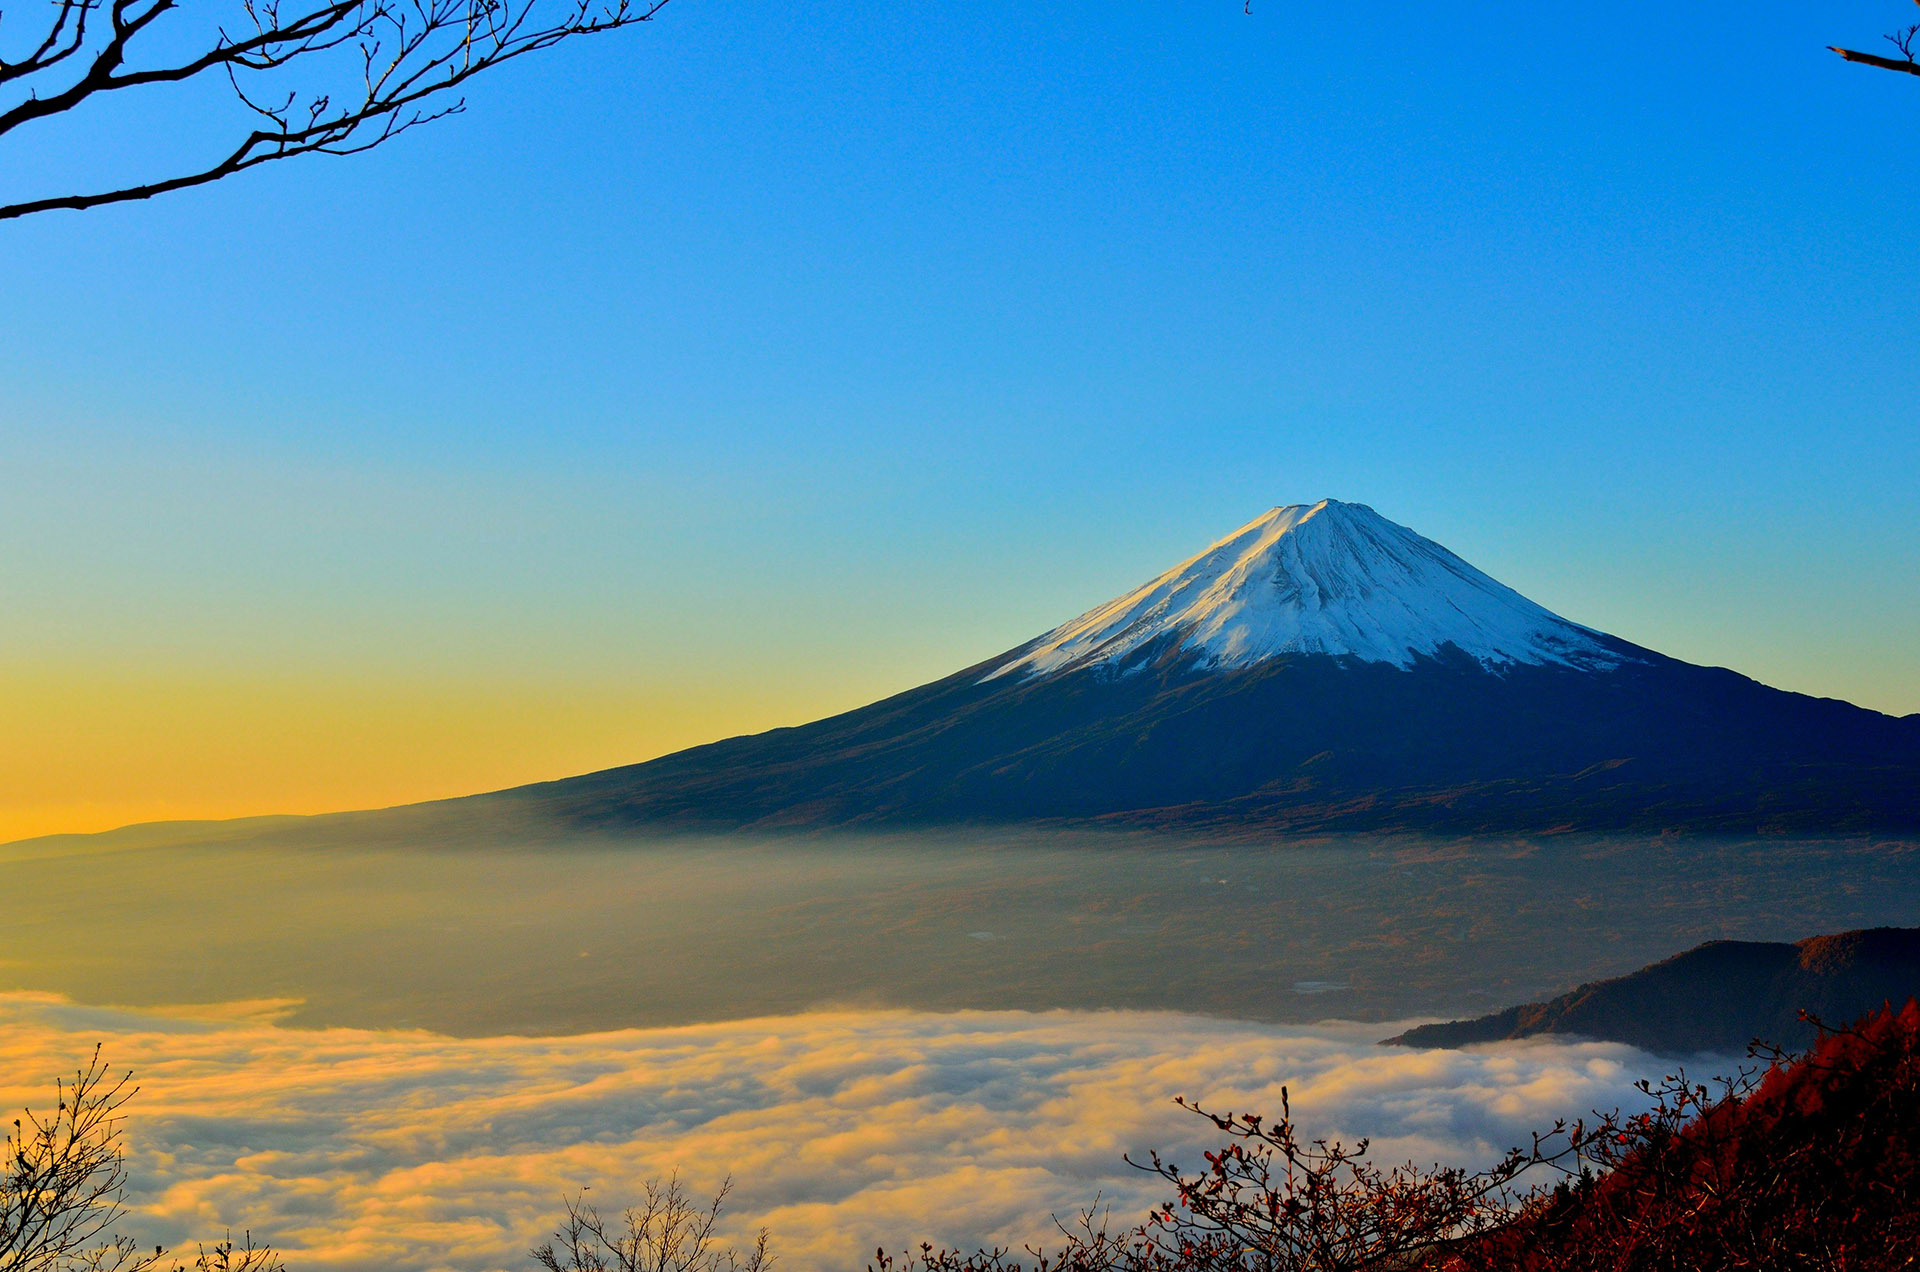 Fuji Mountain in a clear sky